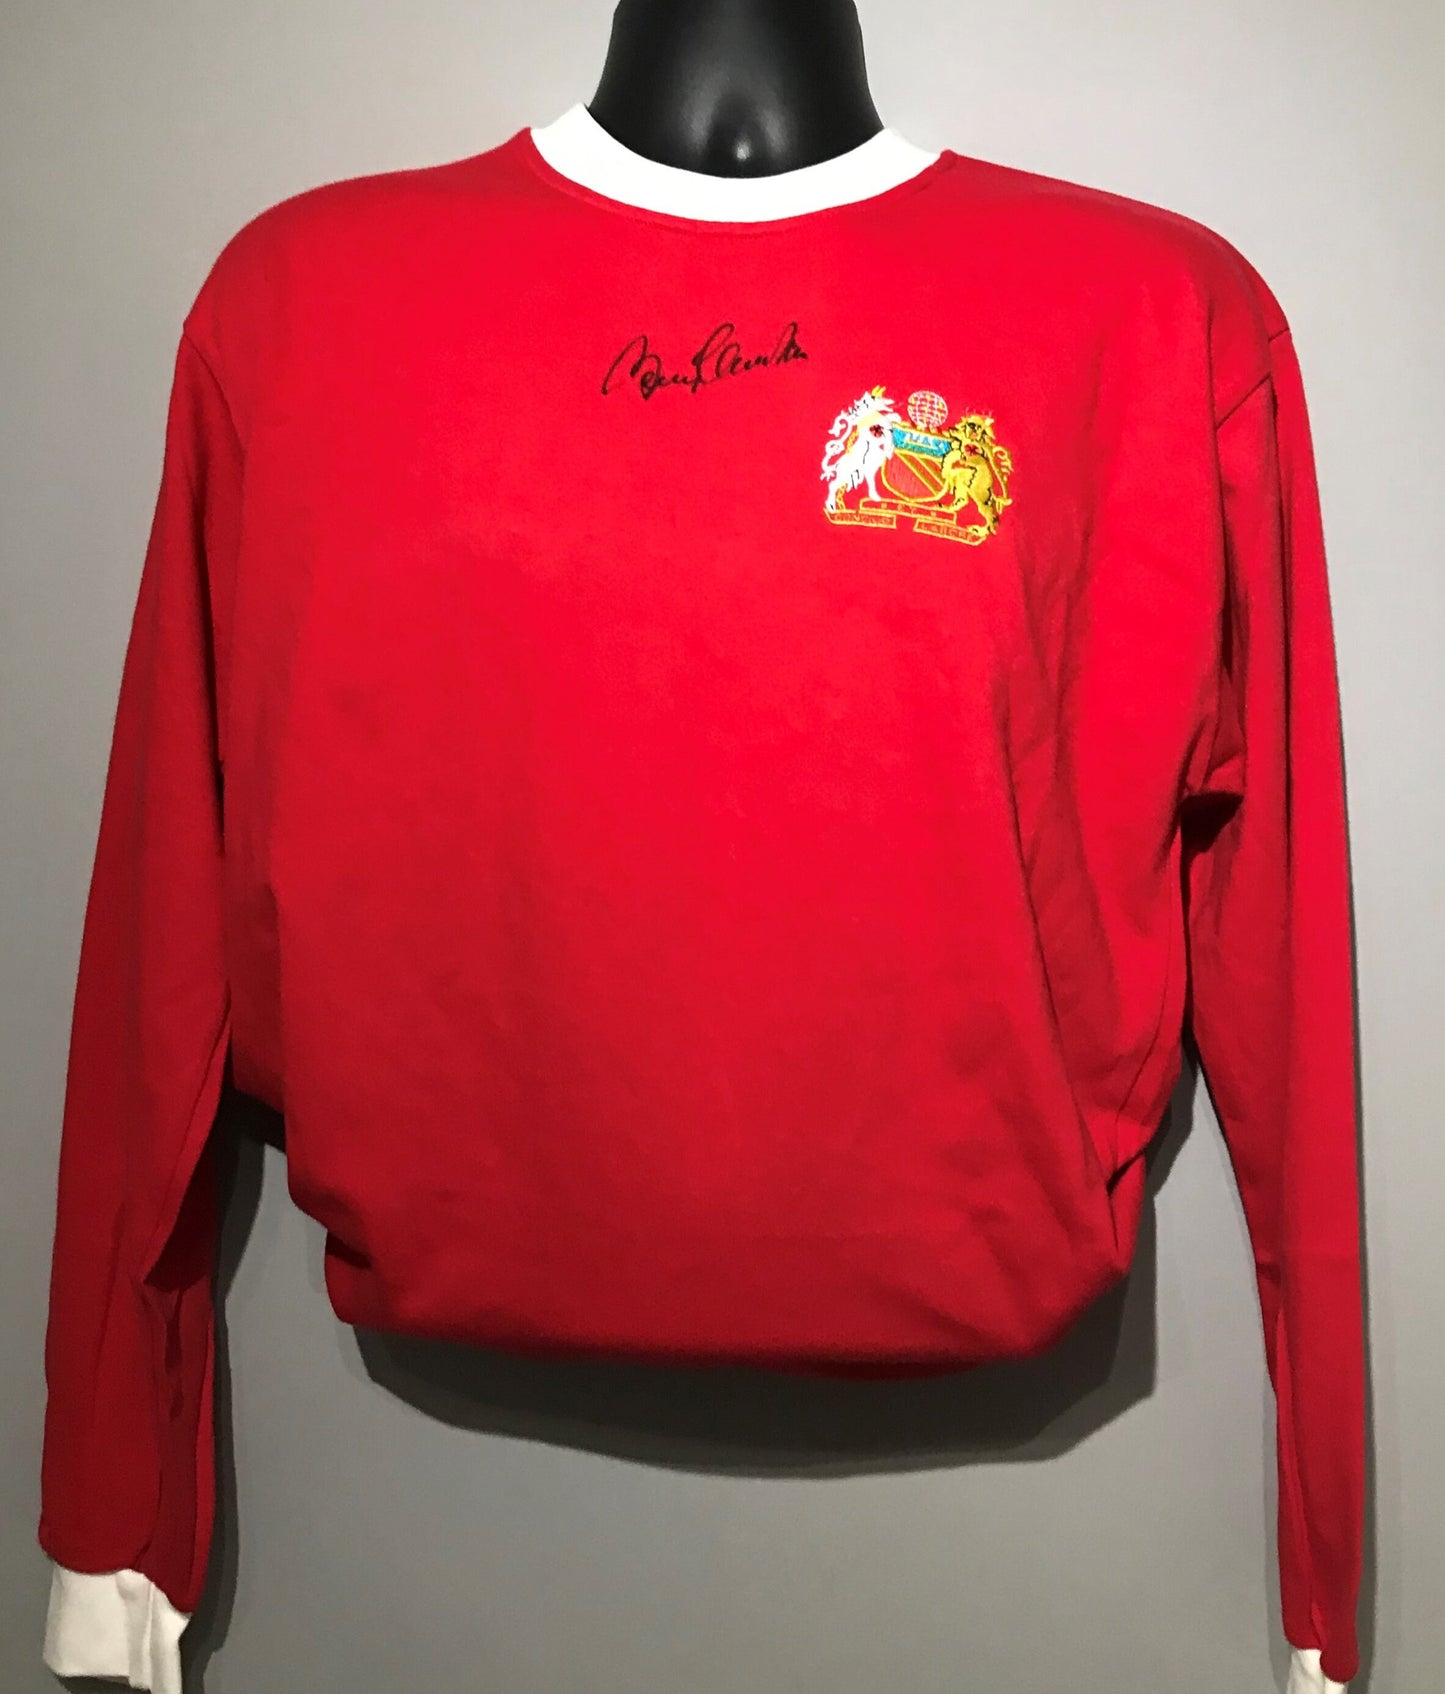 Bobby Charlton - Manchester United FC 1958 - hand-signed replica long-sleeved shirt - MUFC memorabilia, football shirt (UNFRAMED)